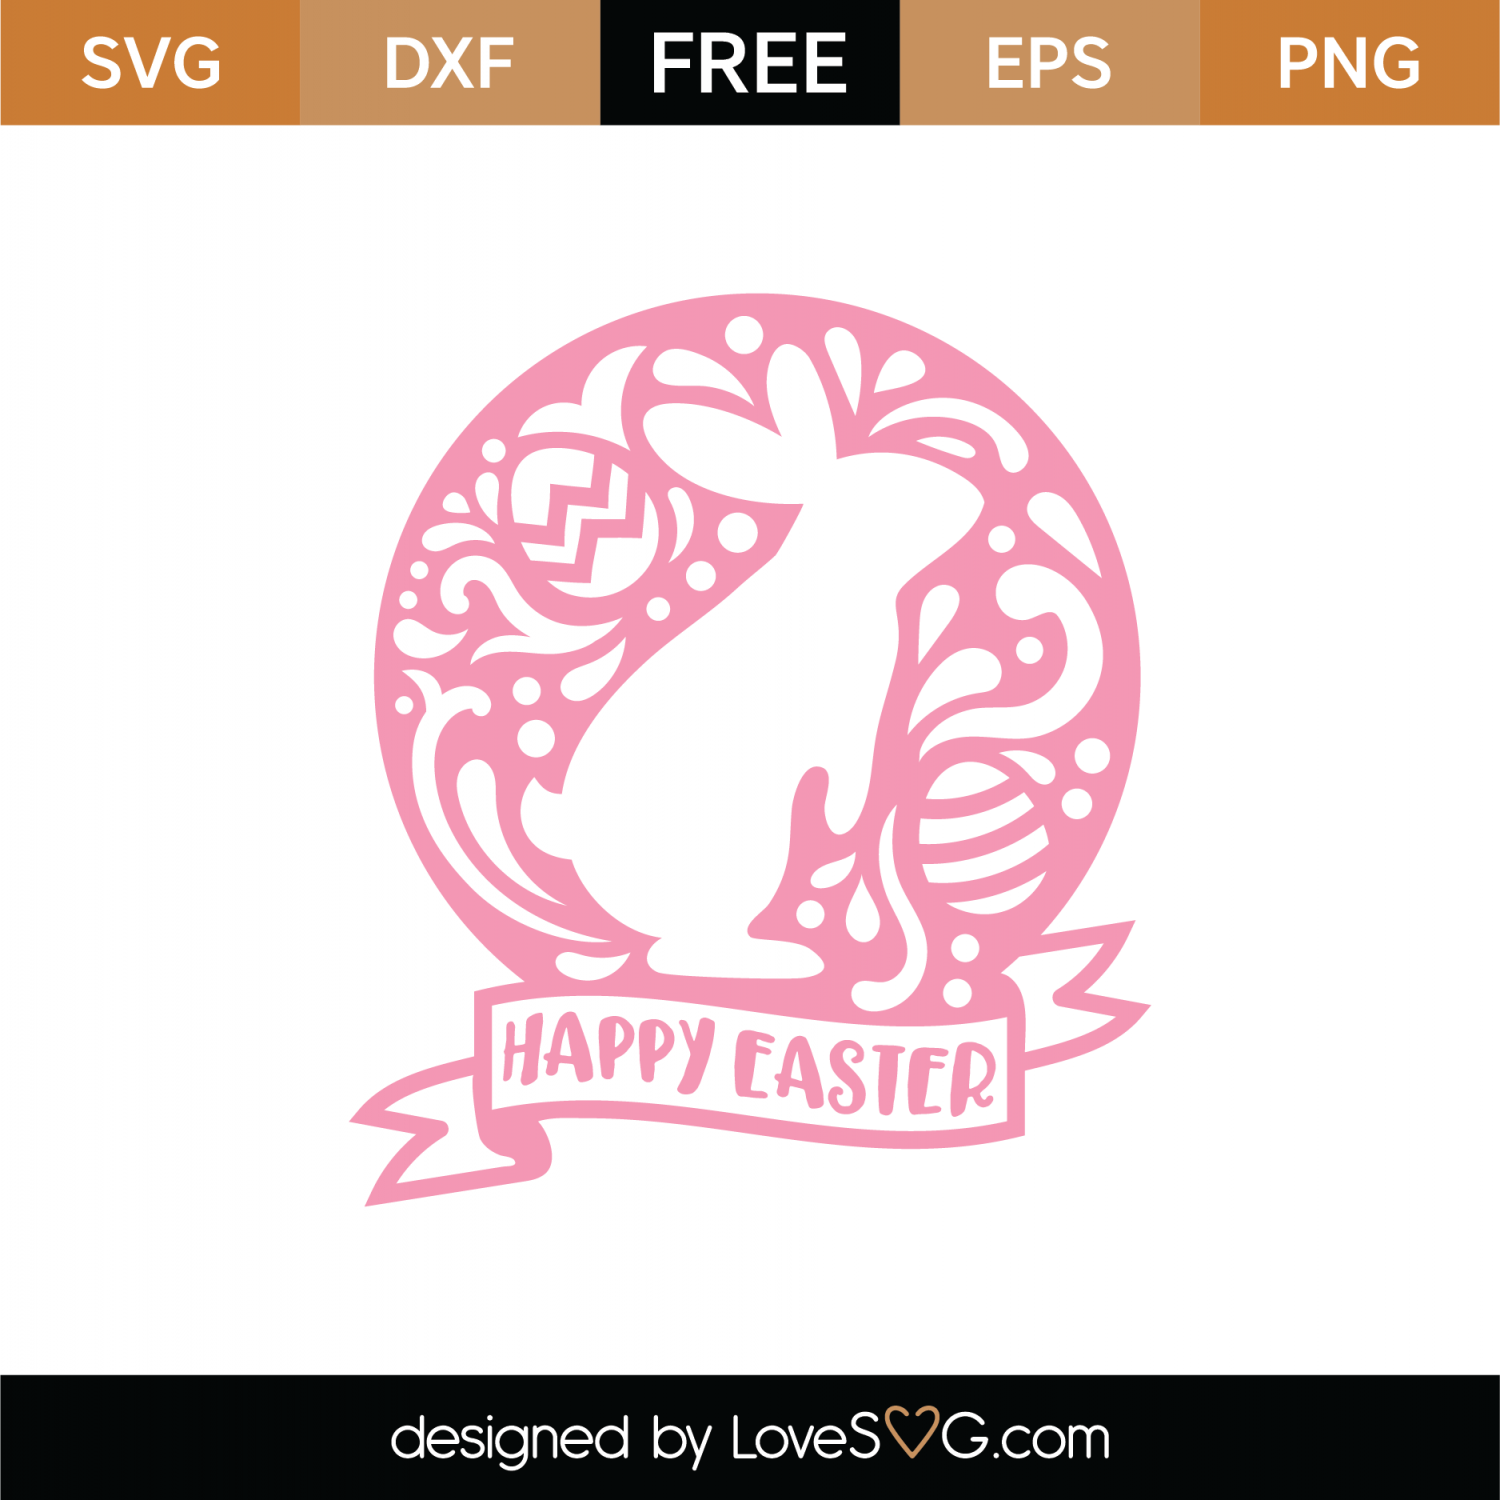 Free Happy Easter Banner SVG Cut File | Lovesvg.com